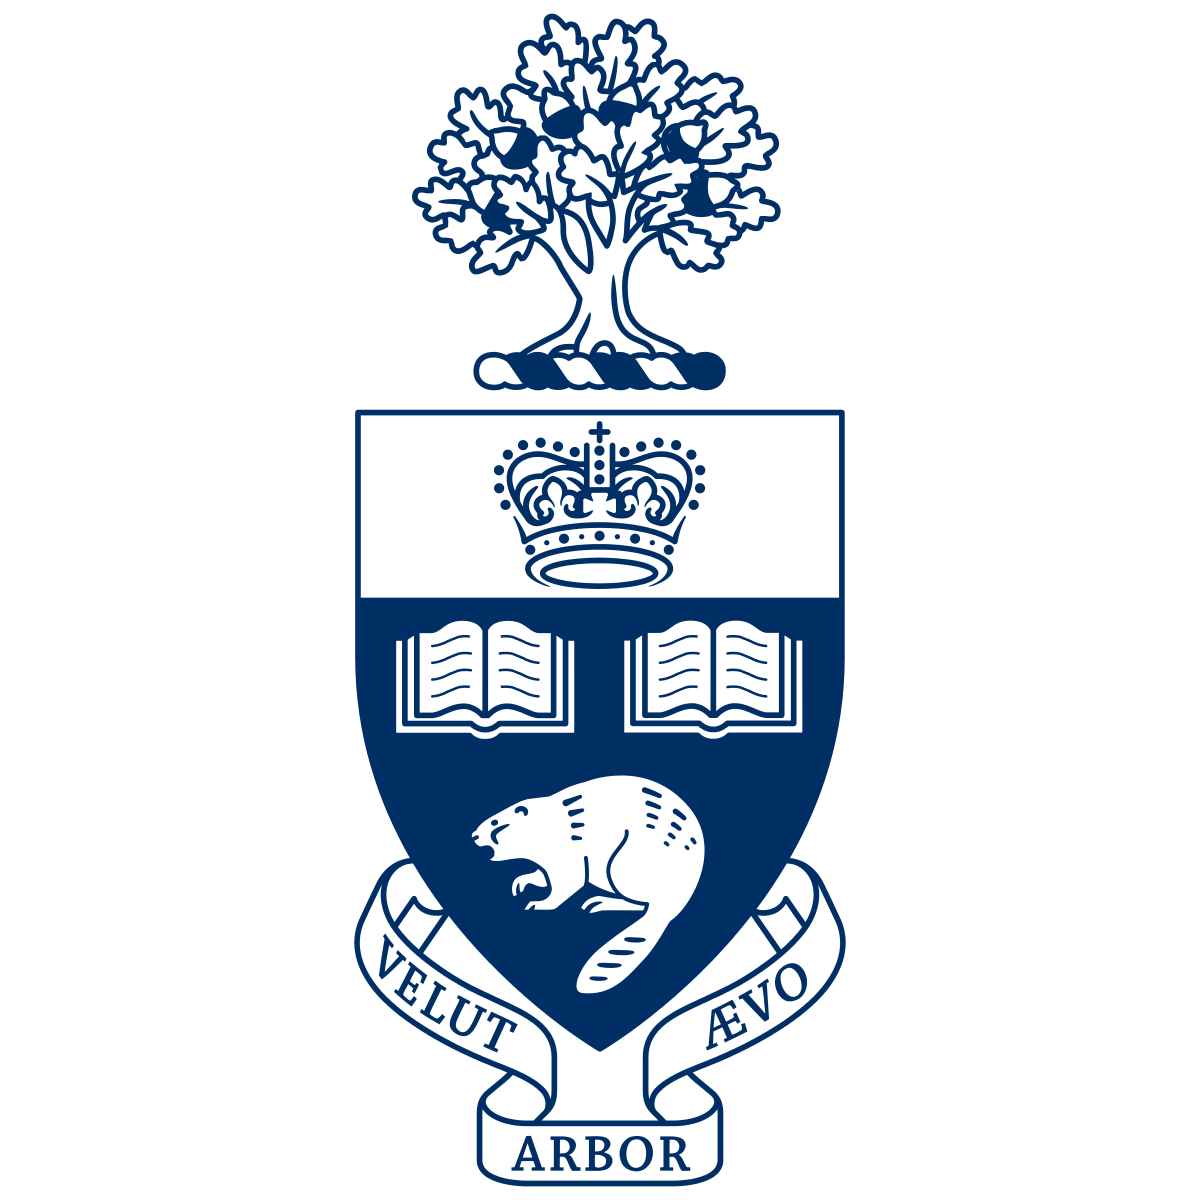 University of Toronto - Logo